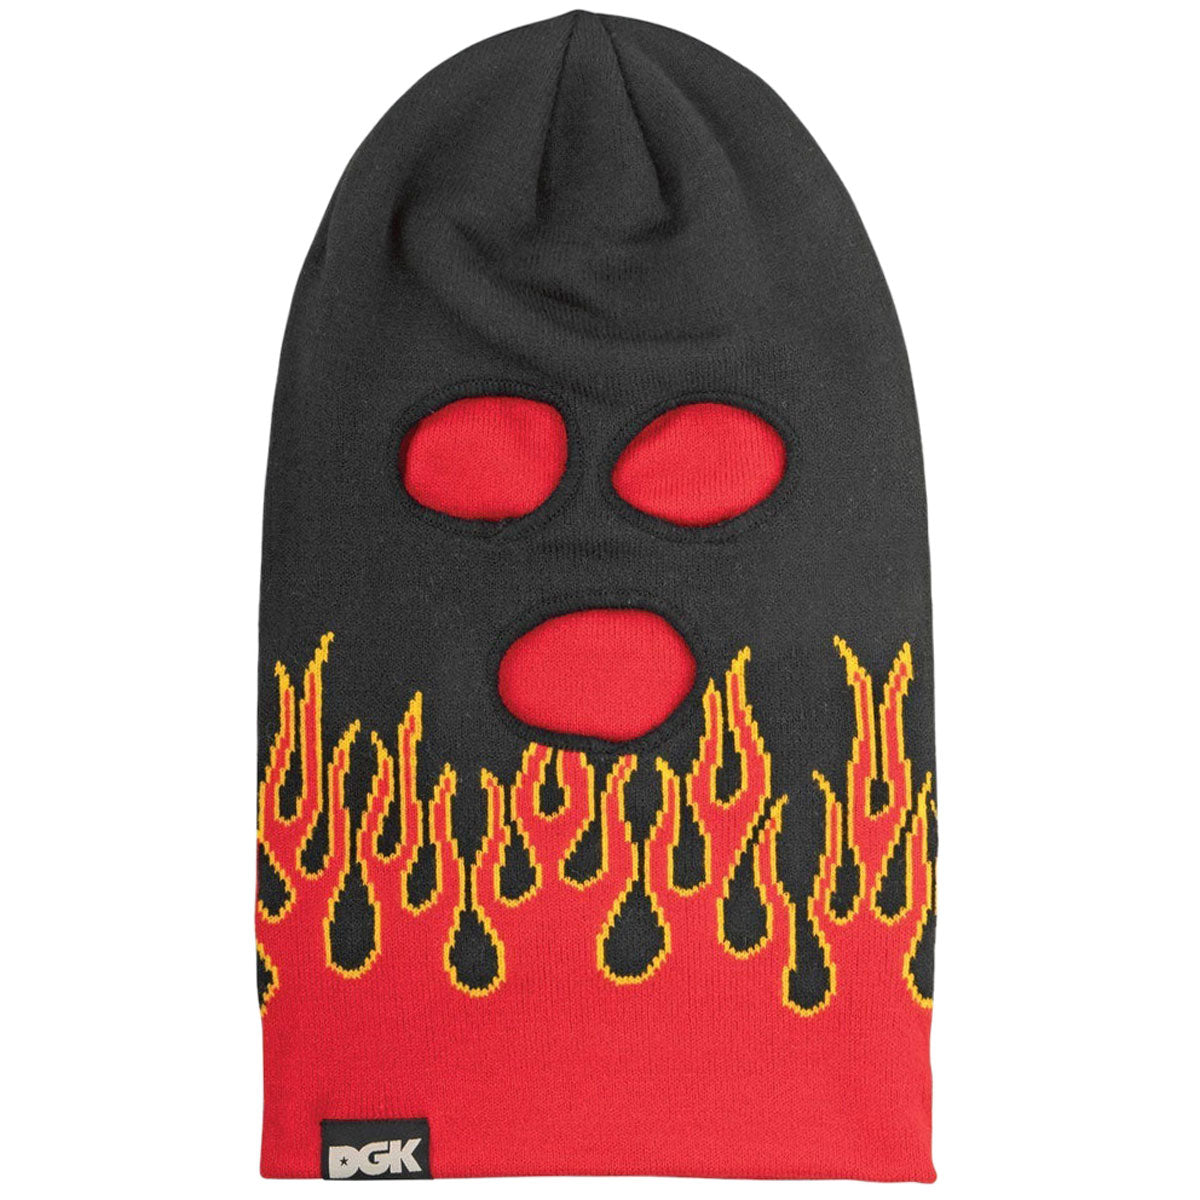 DGK Blaze Ski Mask Beanie - Red image 1